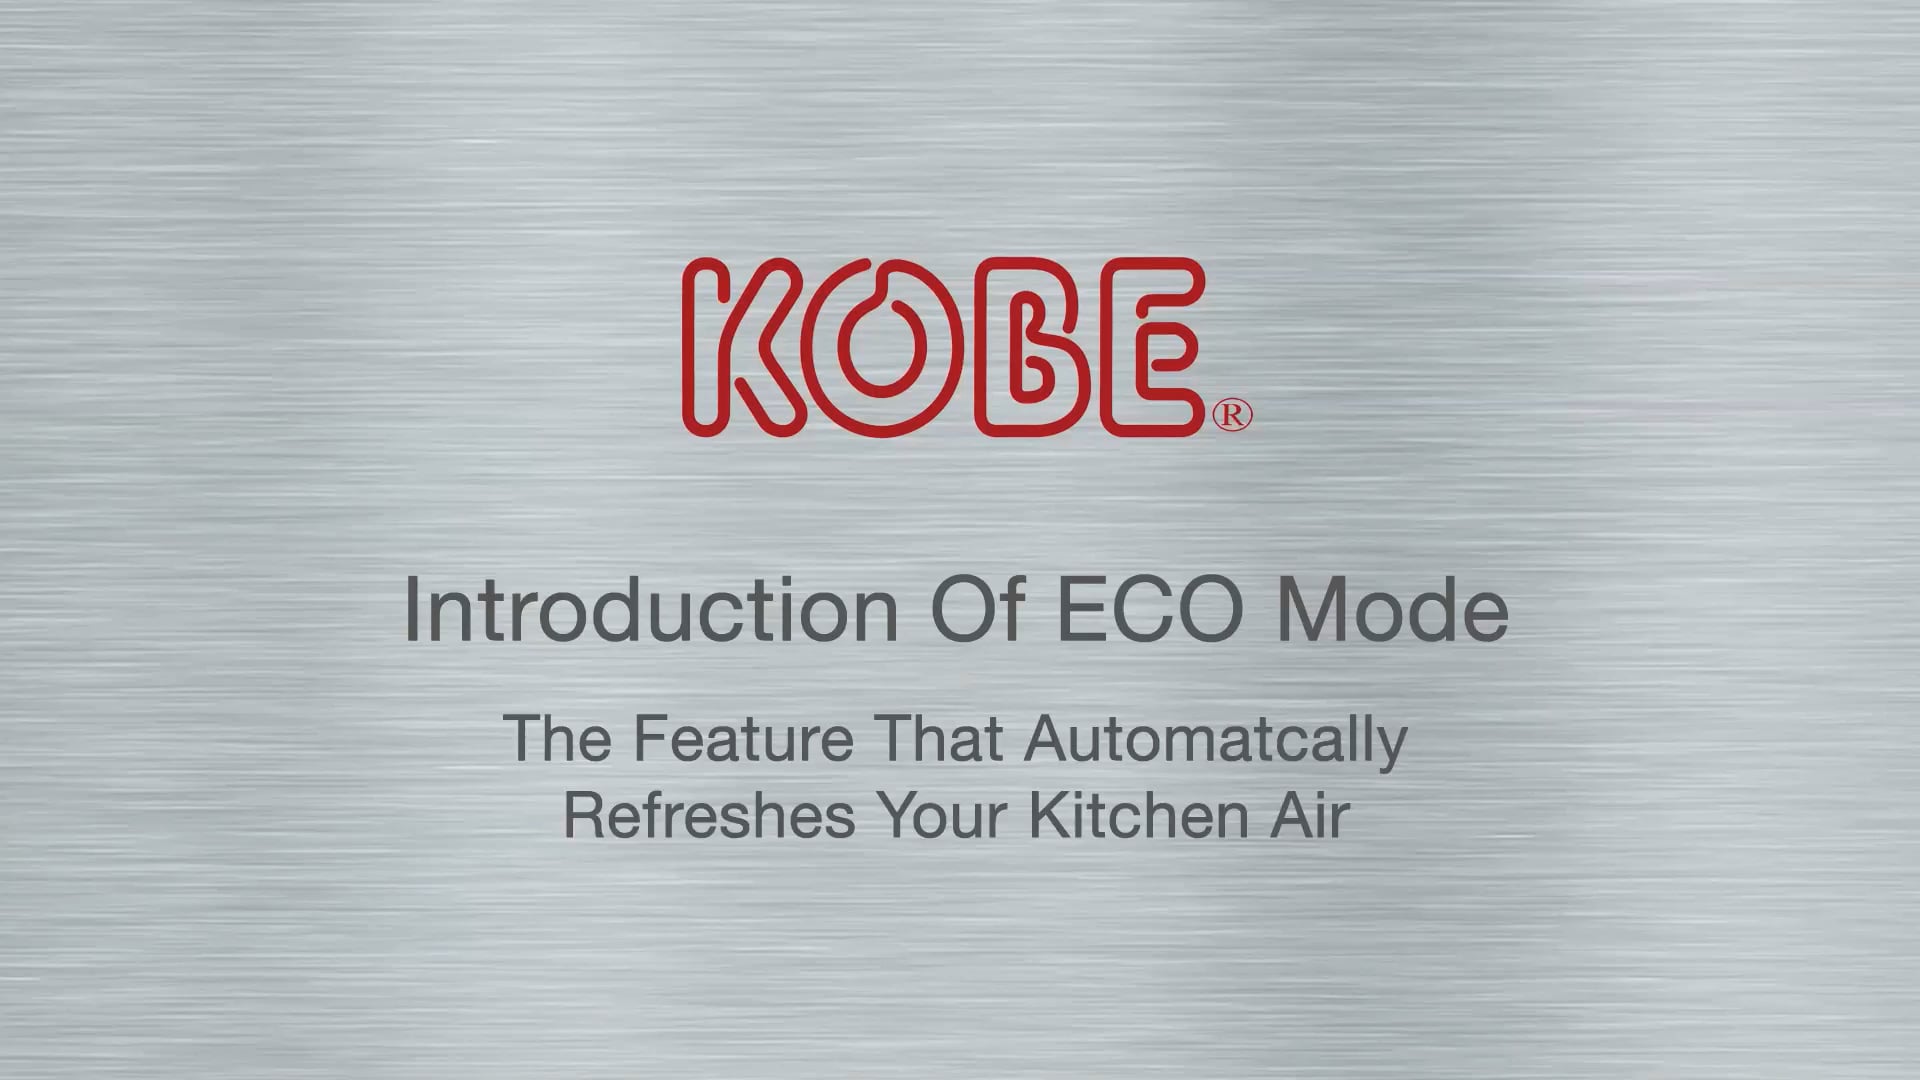 KOBE 700 CFM Hands-Free Fully Auto Wall Mount Range Hood, 36"